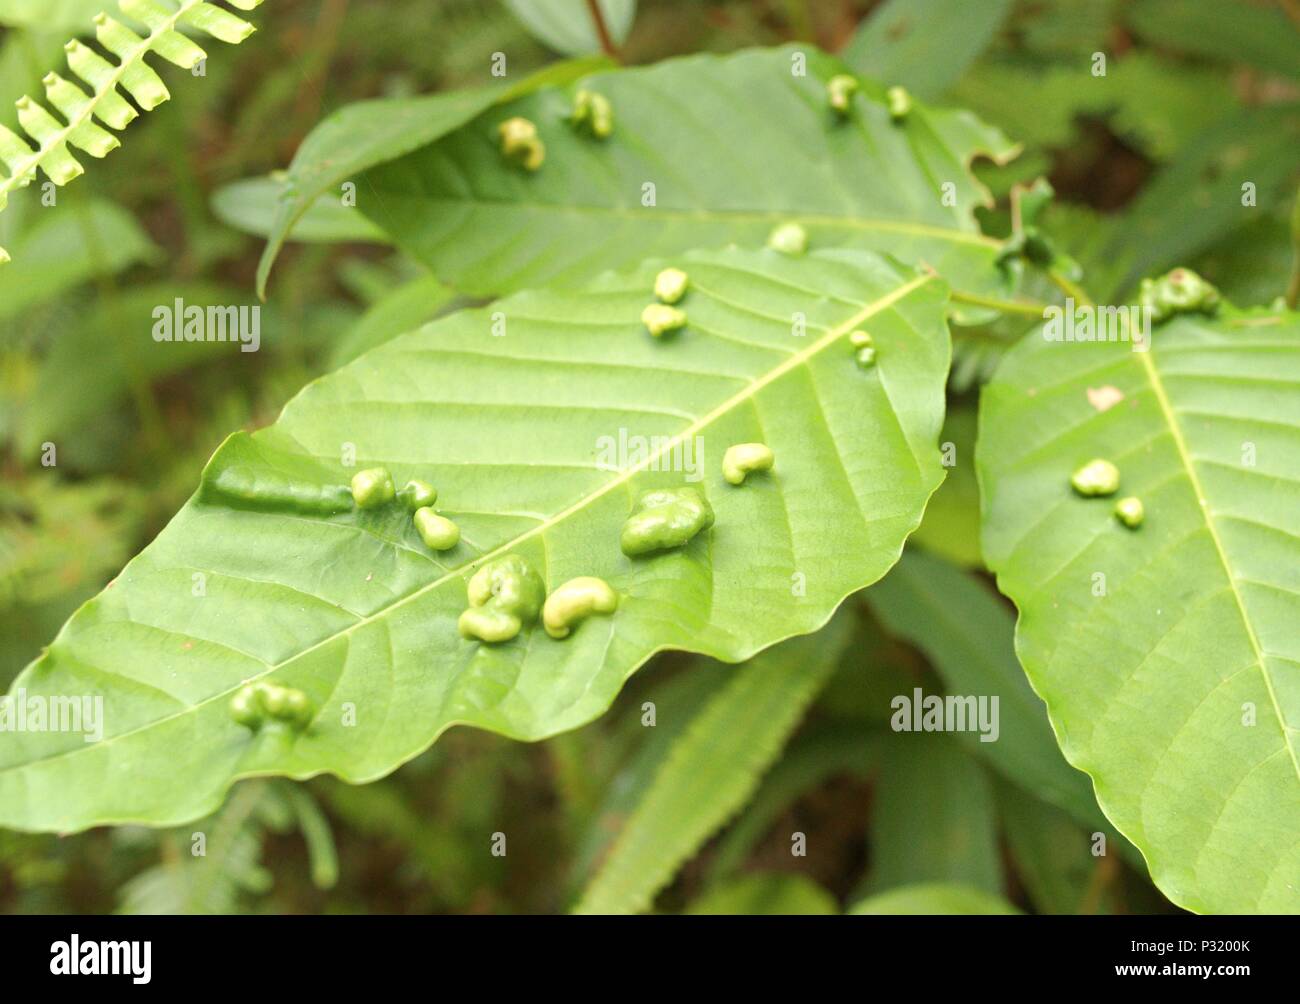 leaf spot disease Stock Photo